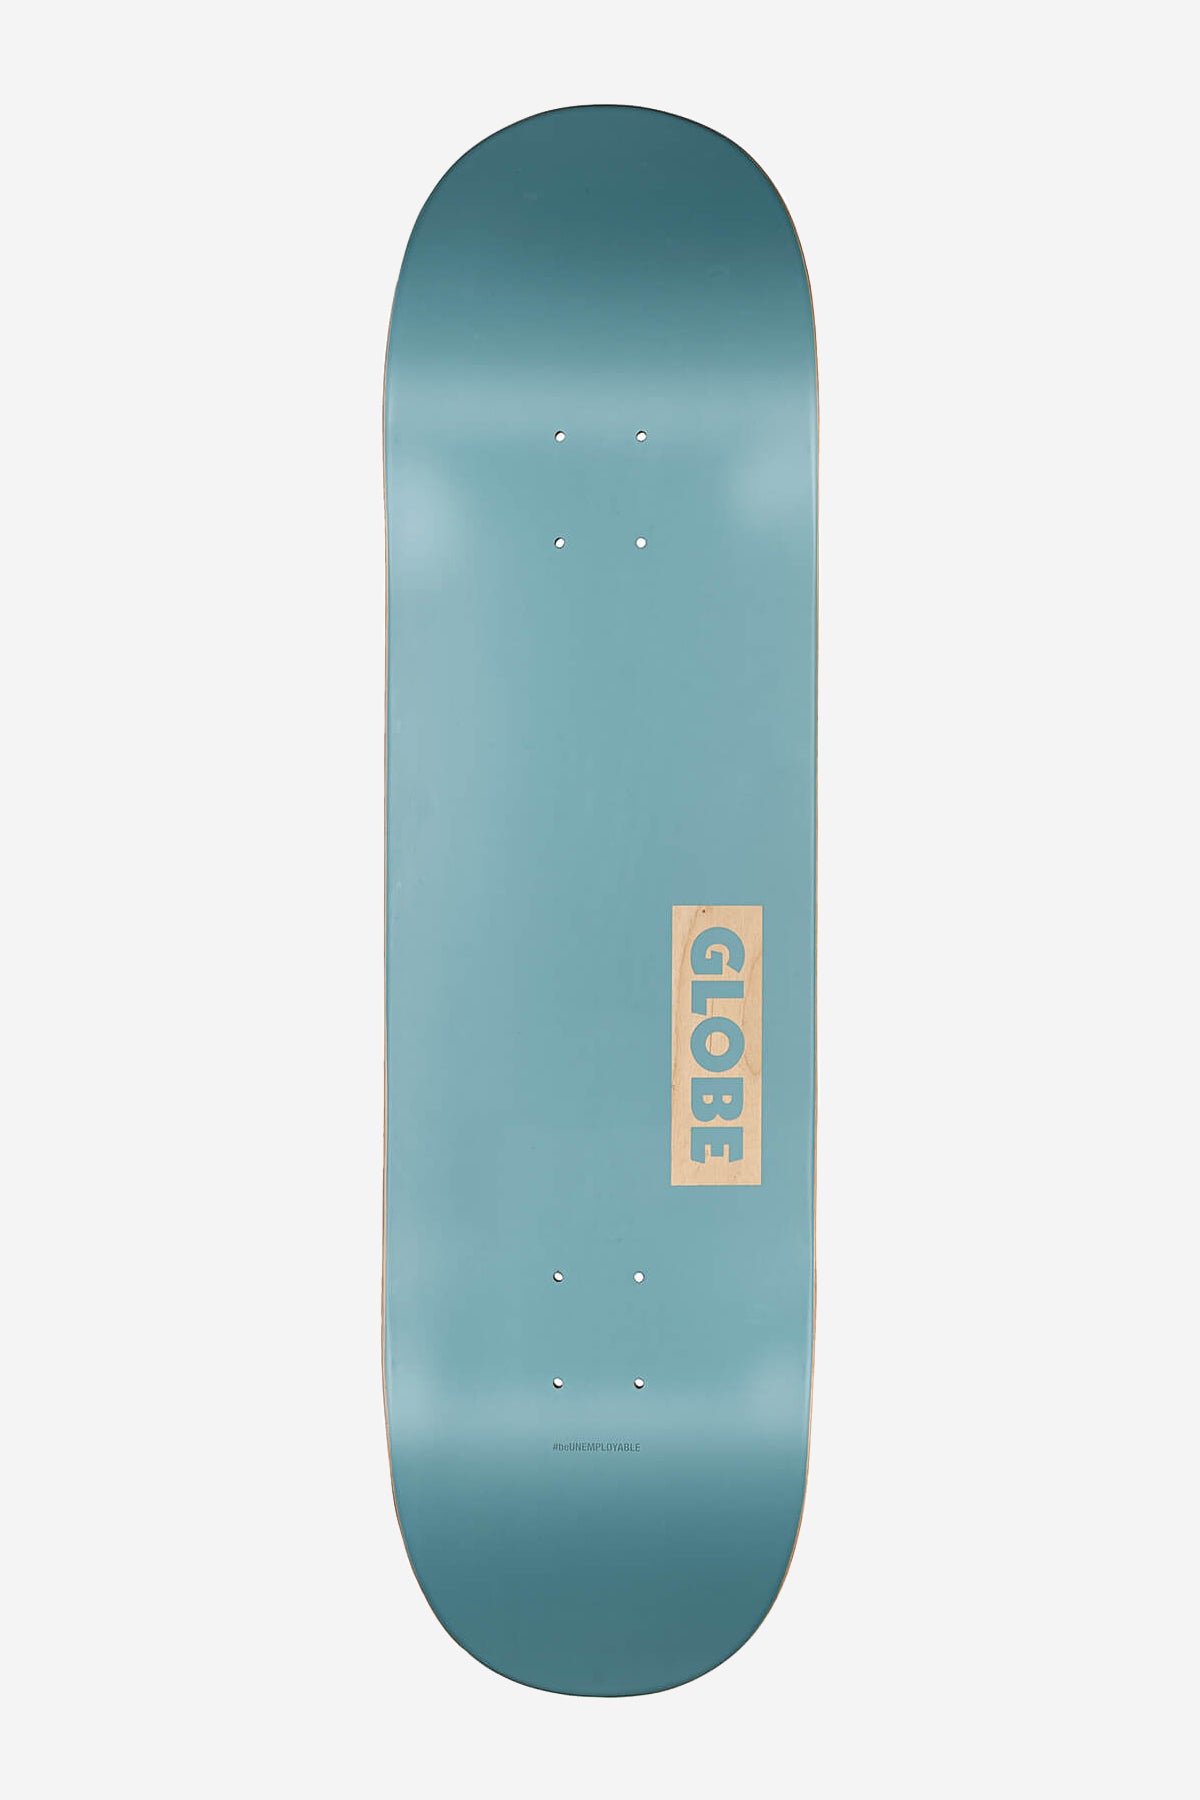 acciaio goodstock blue 8,75" skateboard deck